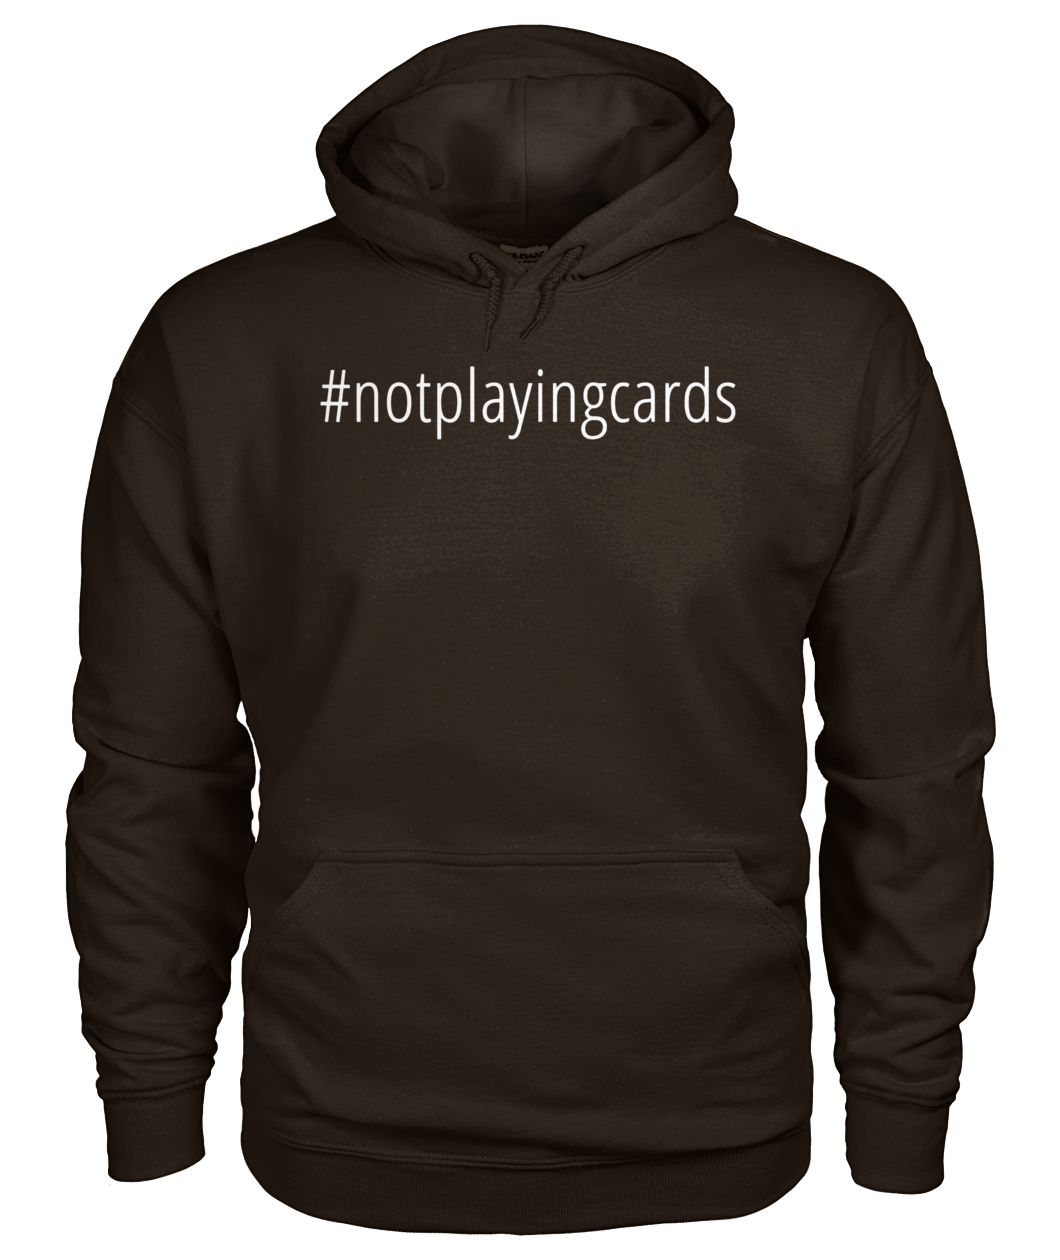 Not playing cards nurse hashtag gildan hoodie